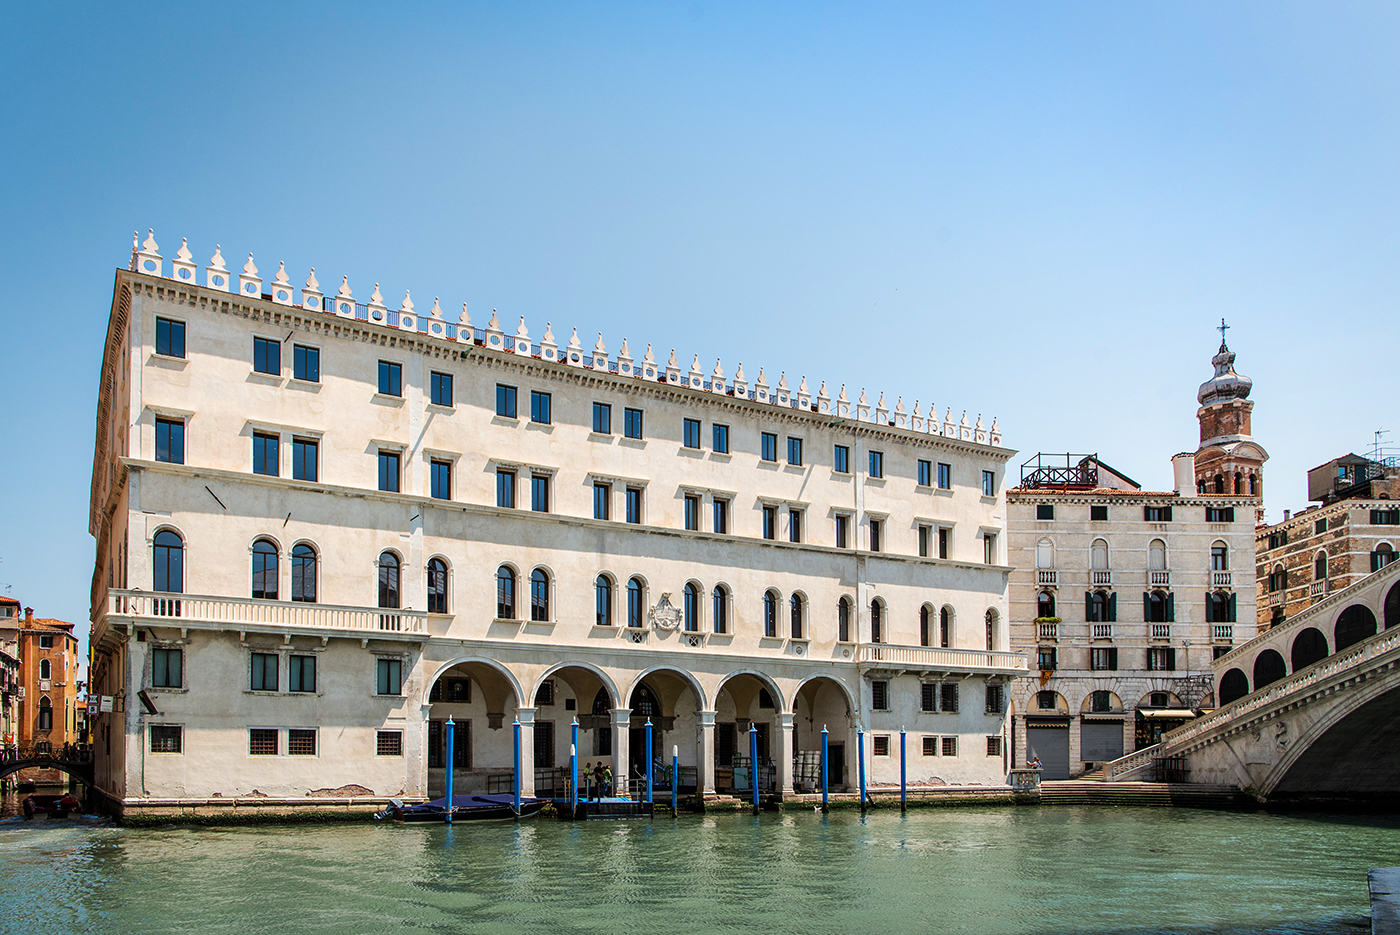 Fondasco dei Tedeschi, Venezian luxury department store, Grand canal facade, for EDGE magazine